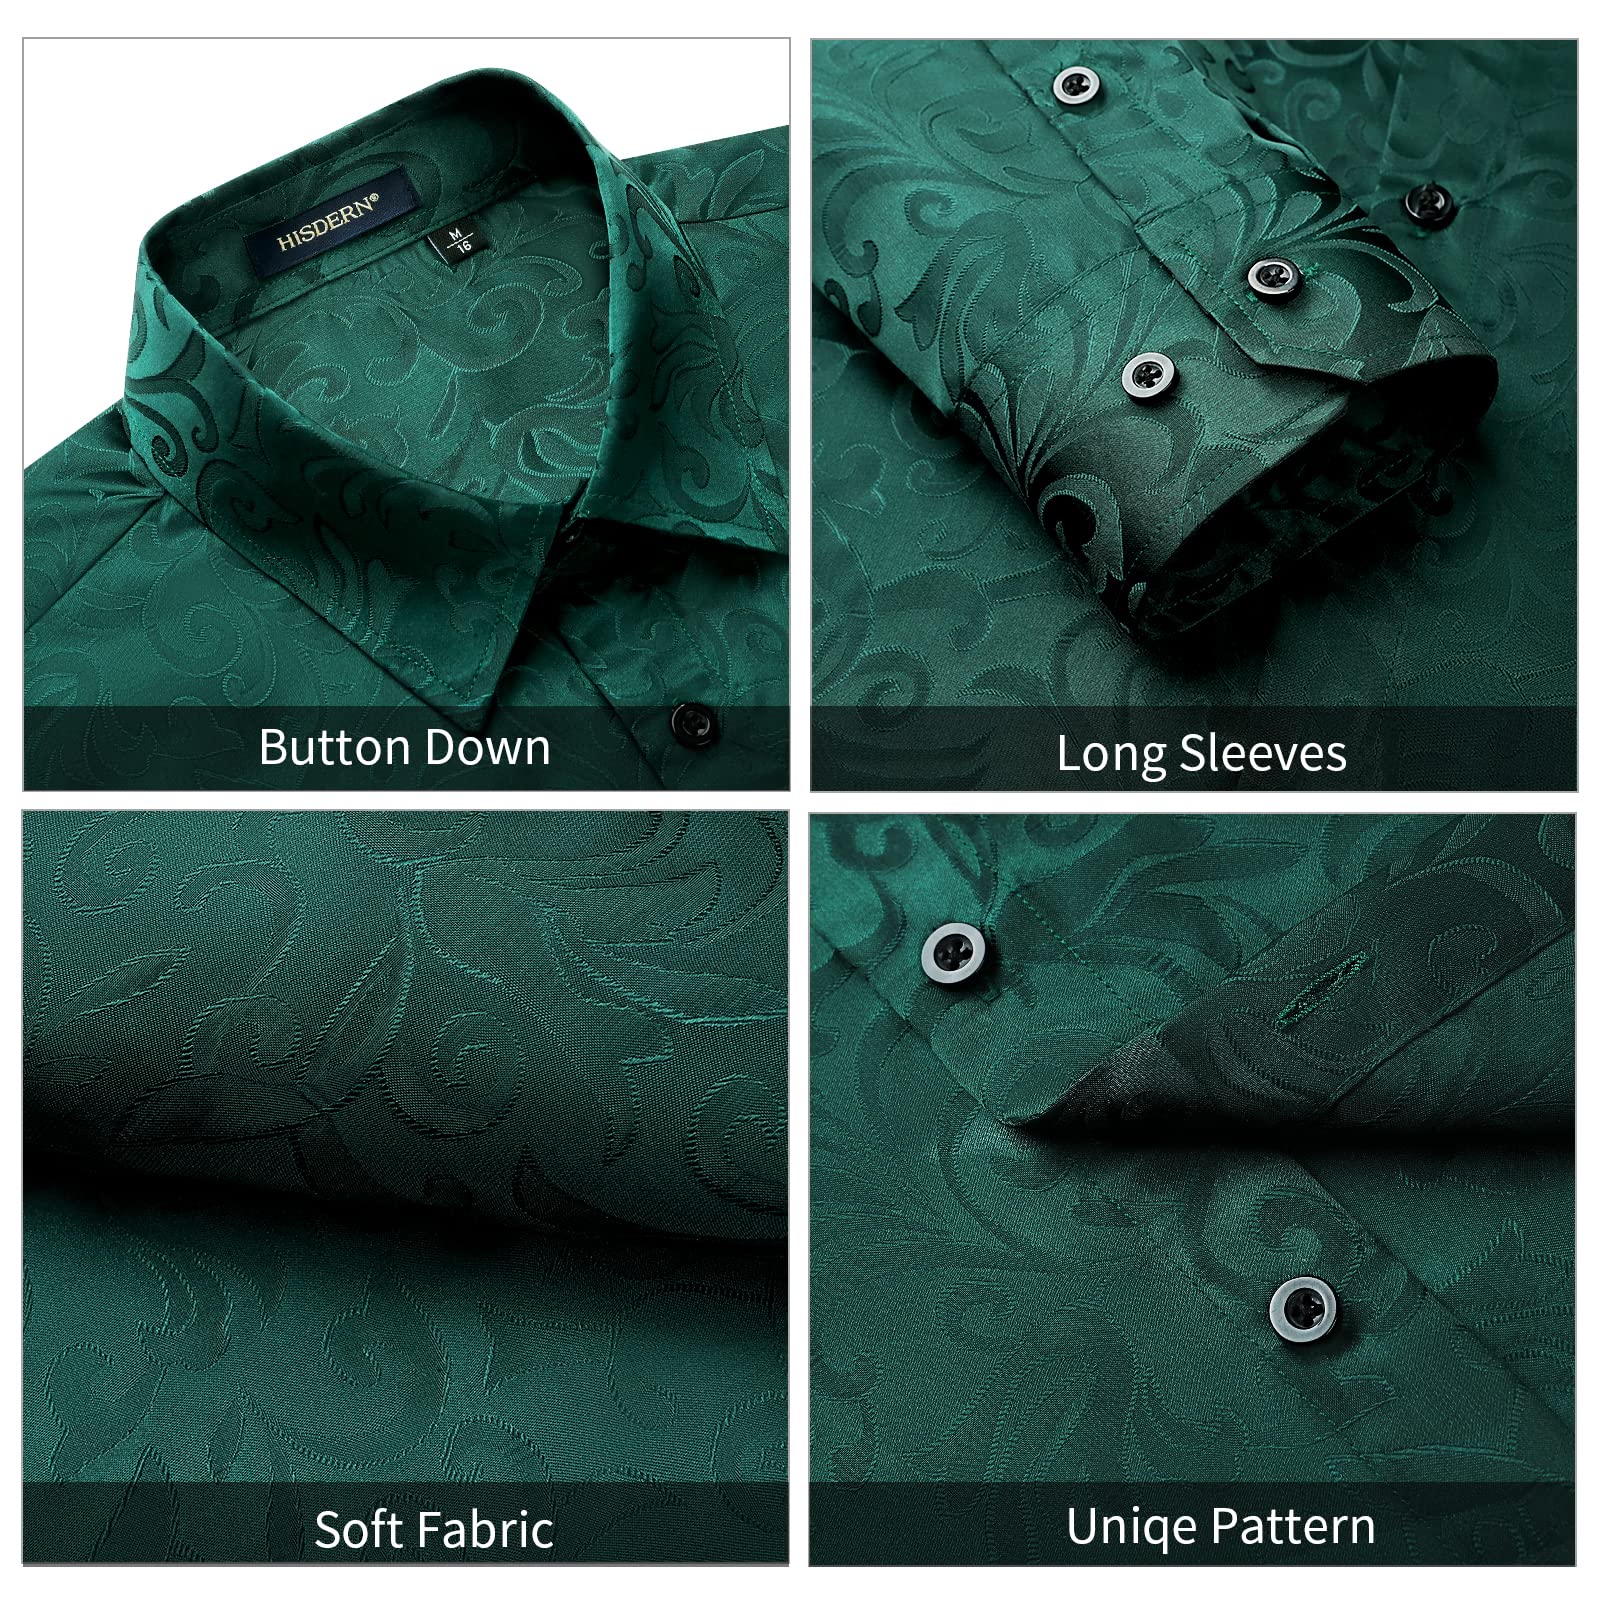 HISDERN Men's Satin Green Dress Shirts Shiny Emerald Luxury Button Down Shirt Casual Fashion Long Sleeve Floral Shirts Tuxedo Party Prom Night Club